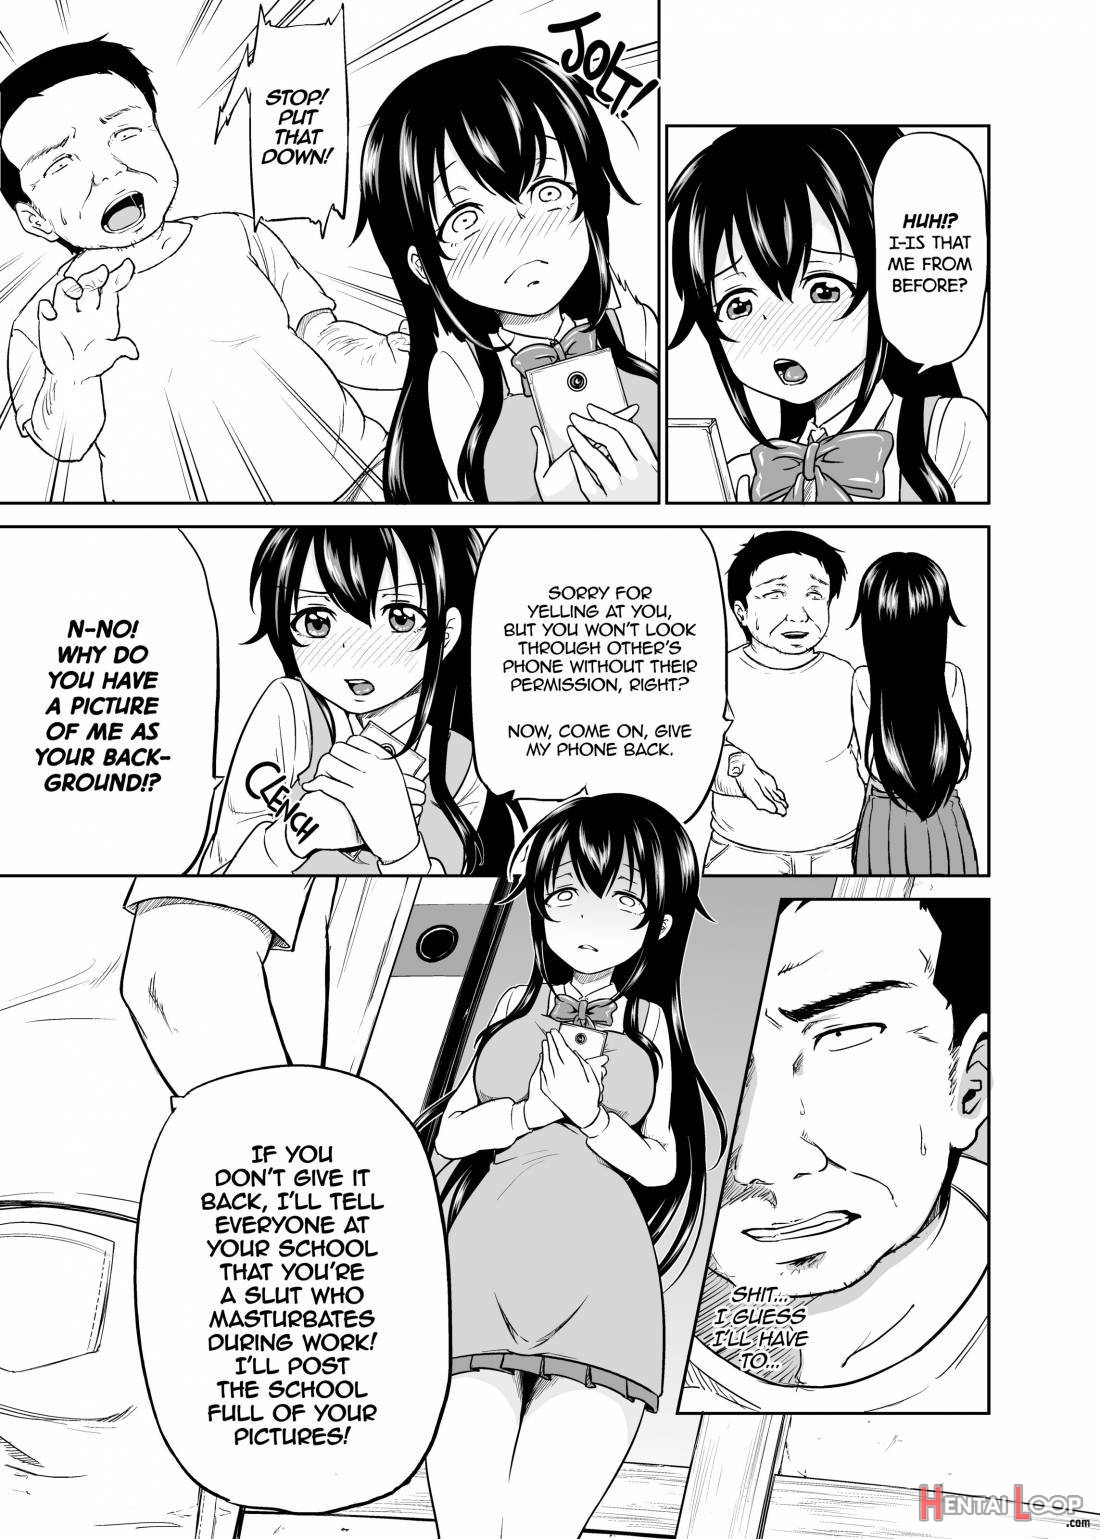 Sachi-chan no Arbeit page 8